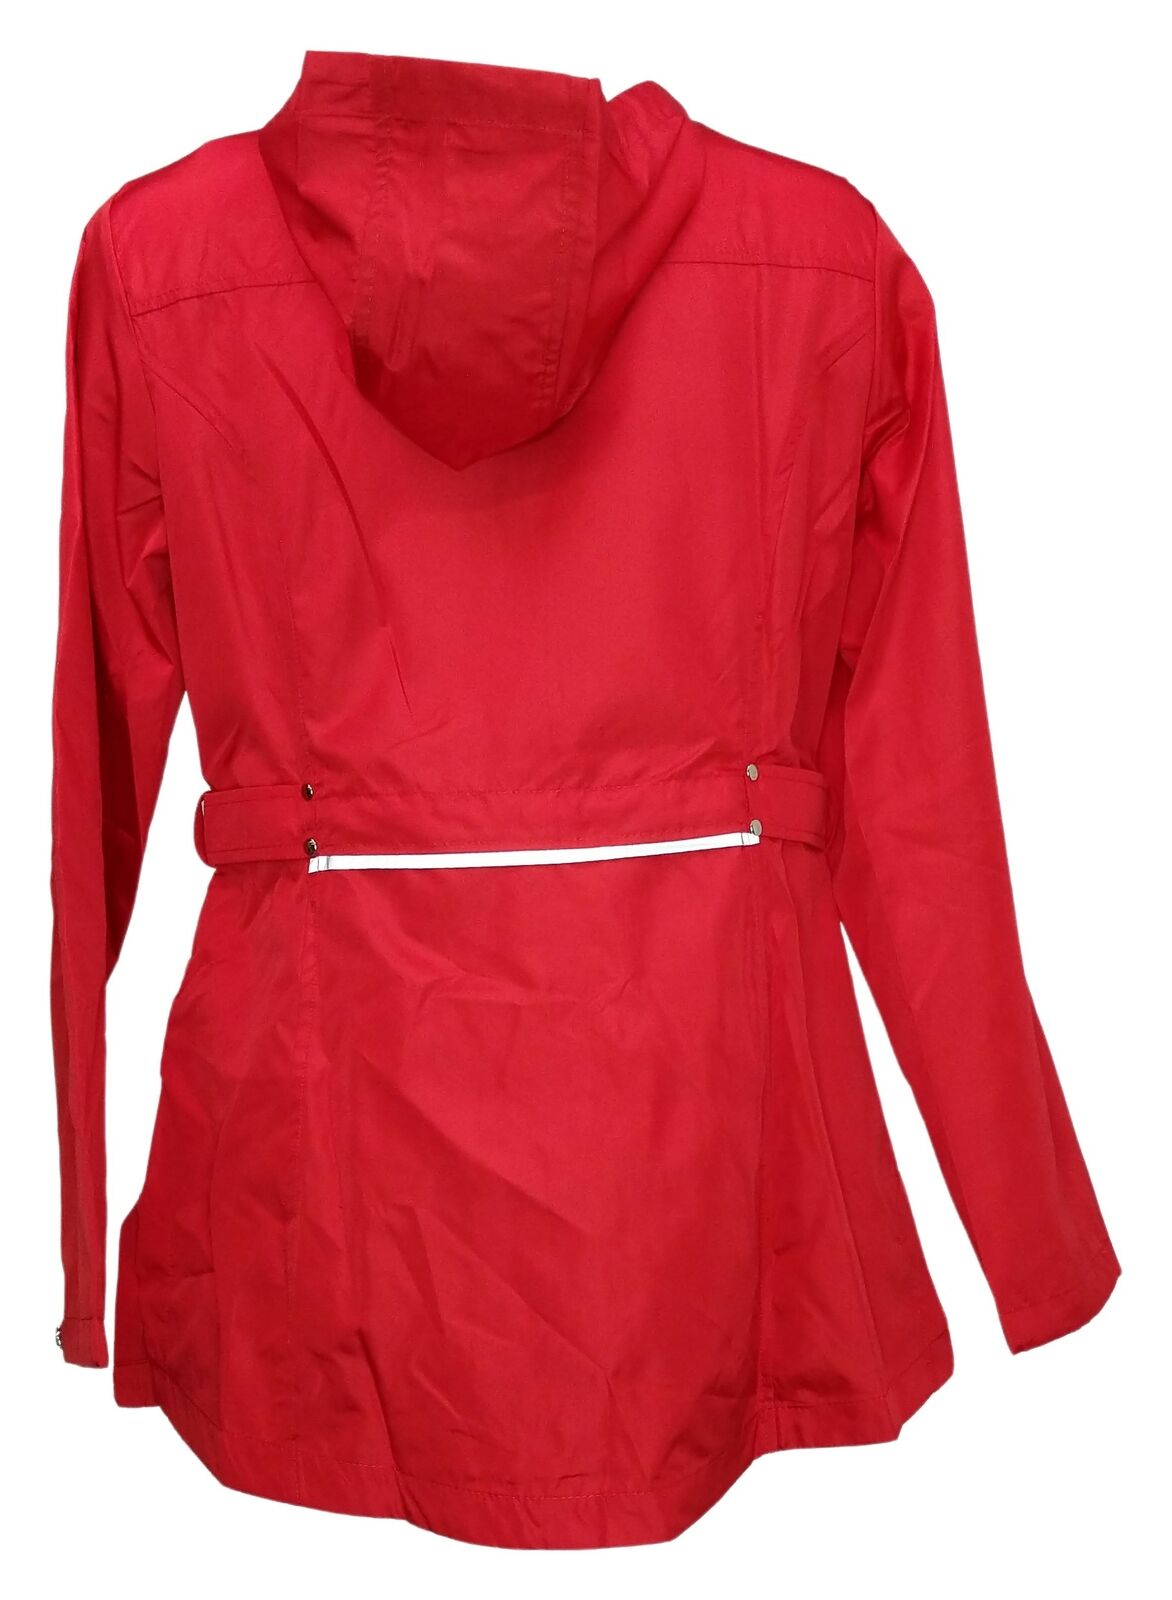 Jones New York Parka-in-a-pocket Rain Jacket. Red.